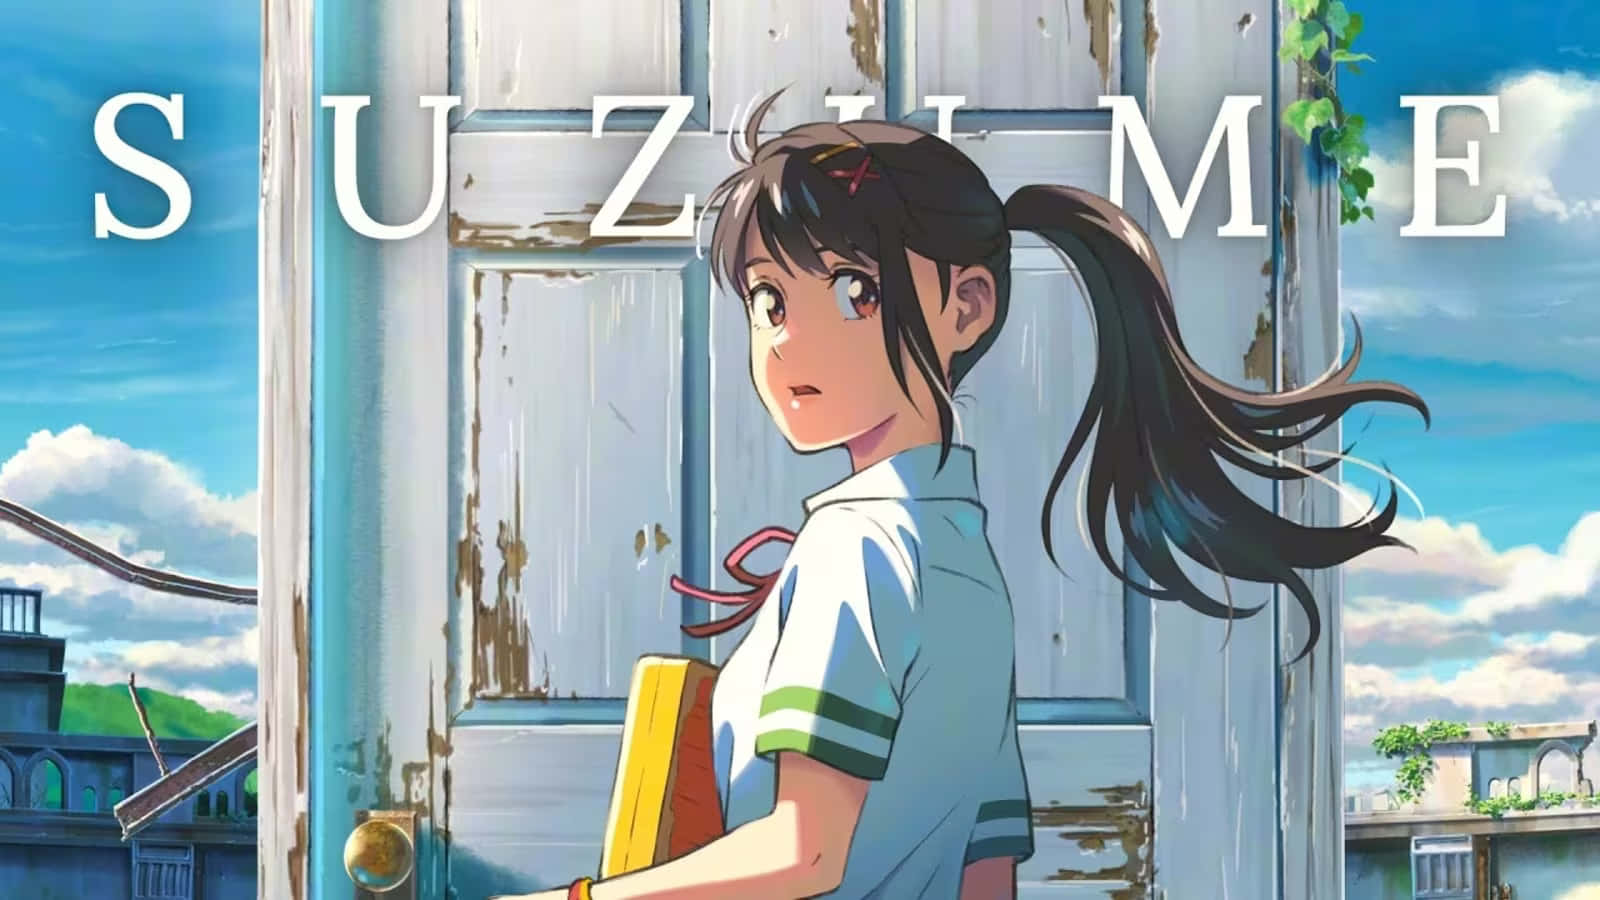 Suzume Anime Movie Poster Wallpaper